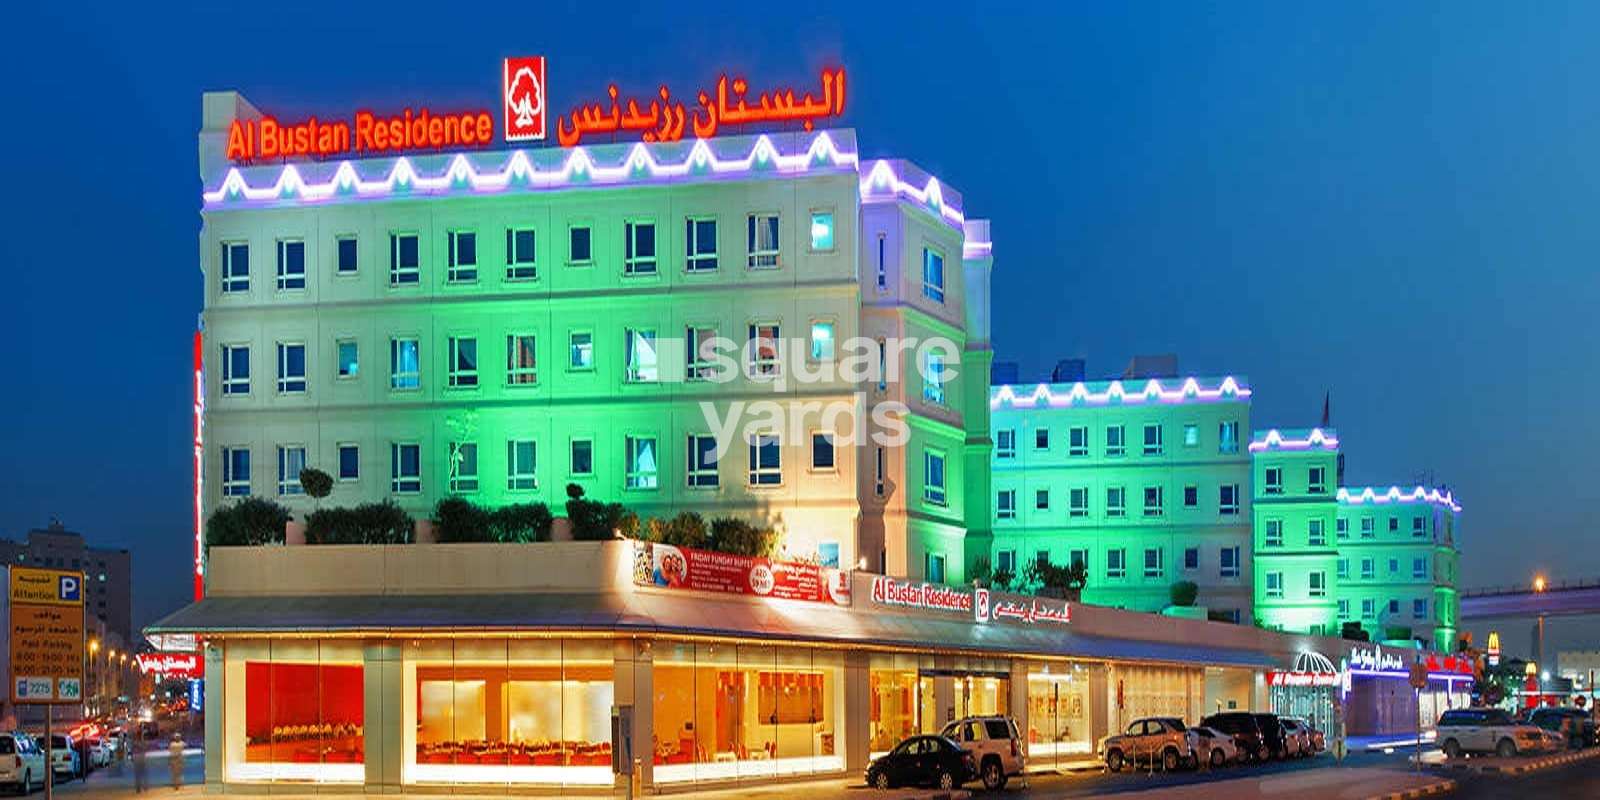 Al Bustan Centre & Residence Cover Image